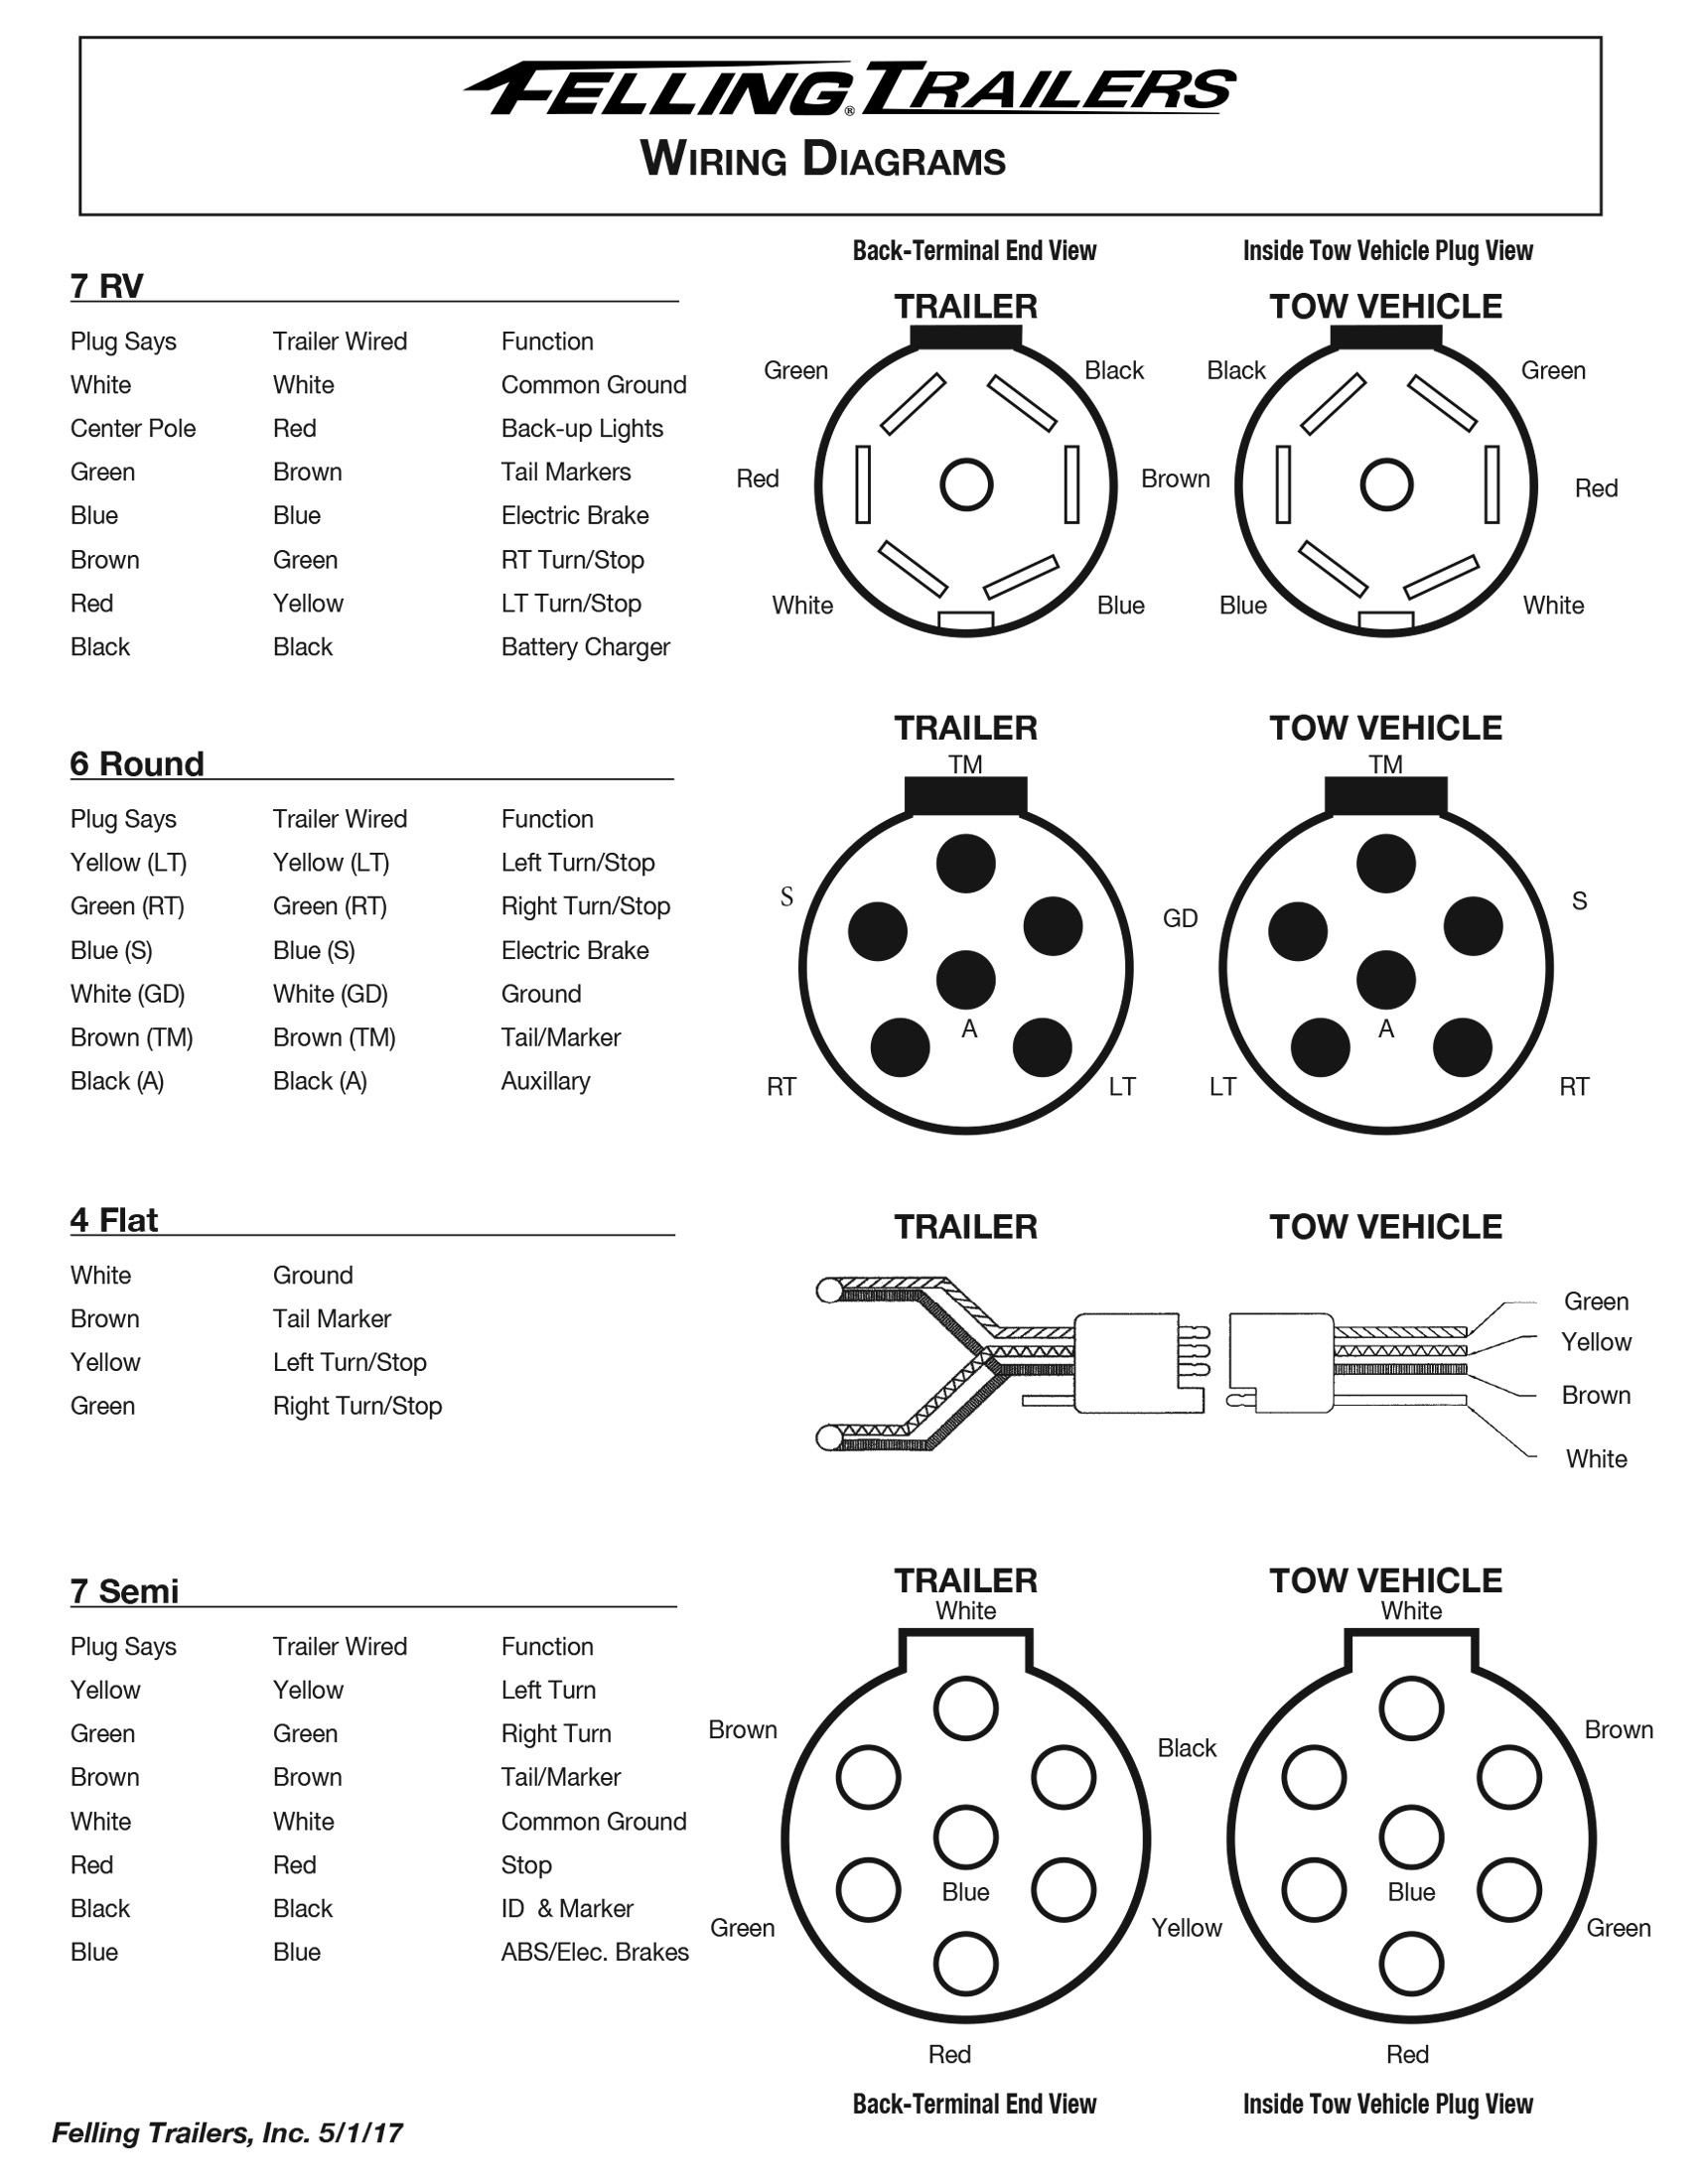 Service- Felling Trailers Wiring Diagrams, Wheel Toque - 7 Way Trailer Plug Wiring Diagram